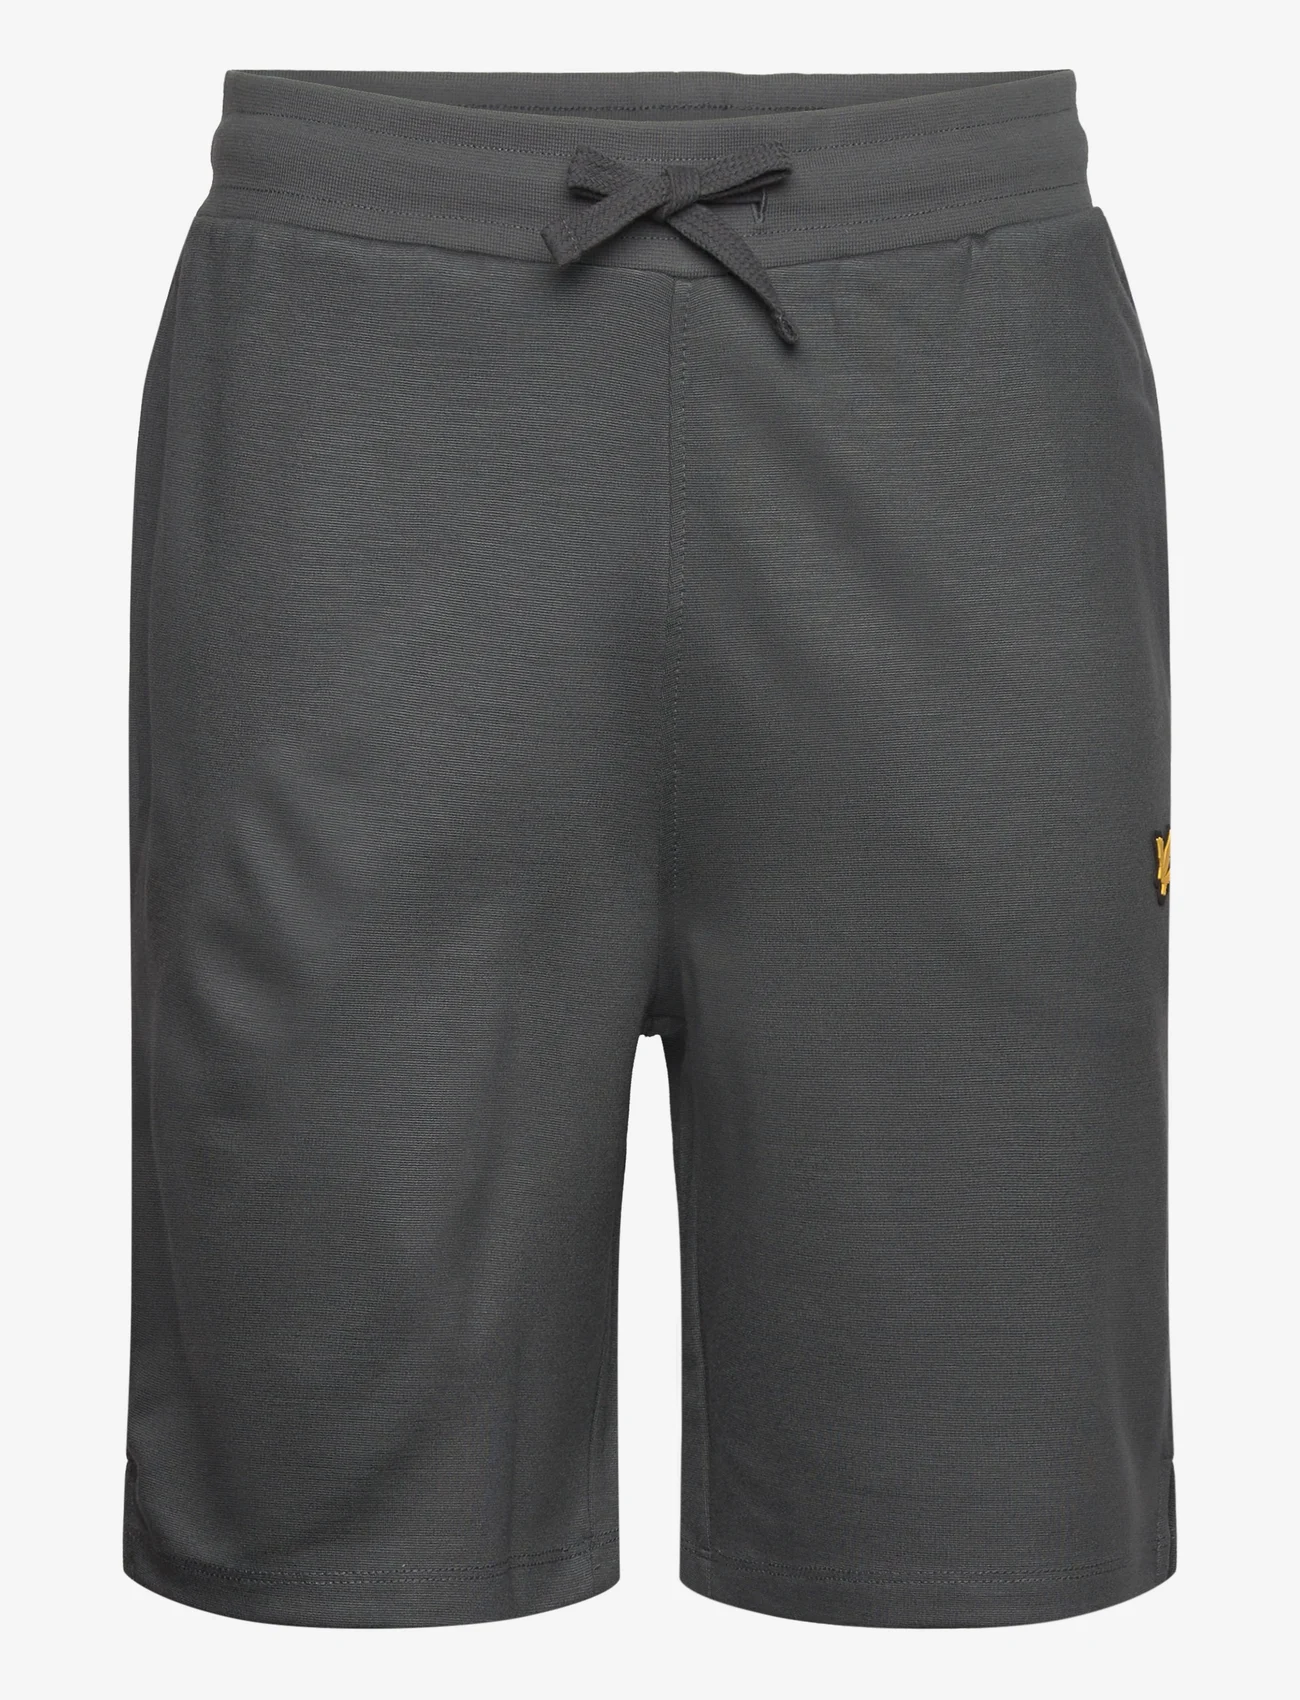 Lyle & Scott Sport - Fly Fleece Shorts - sportiniai šortai - x129 graphite - 0